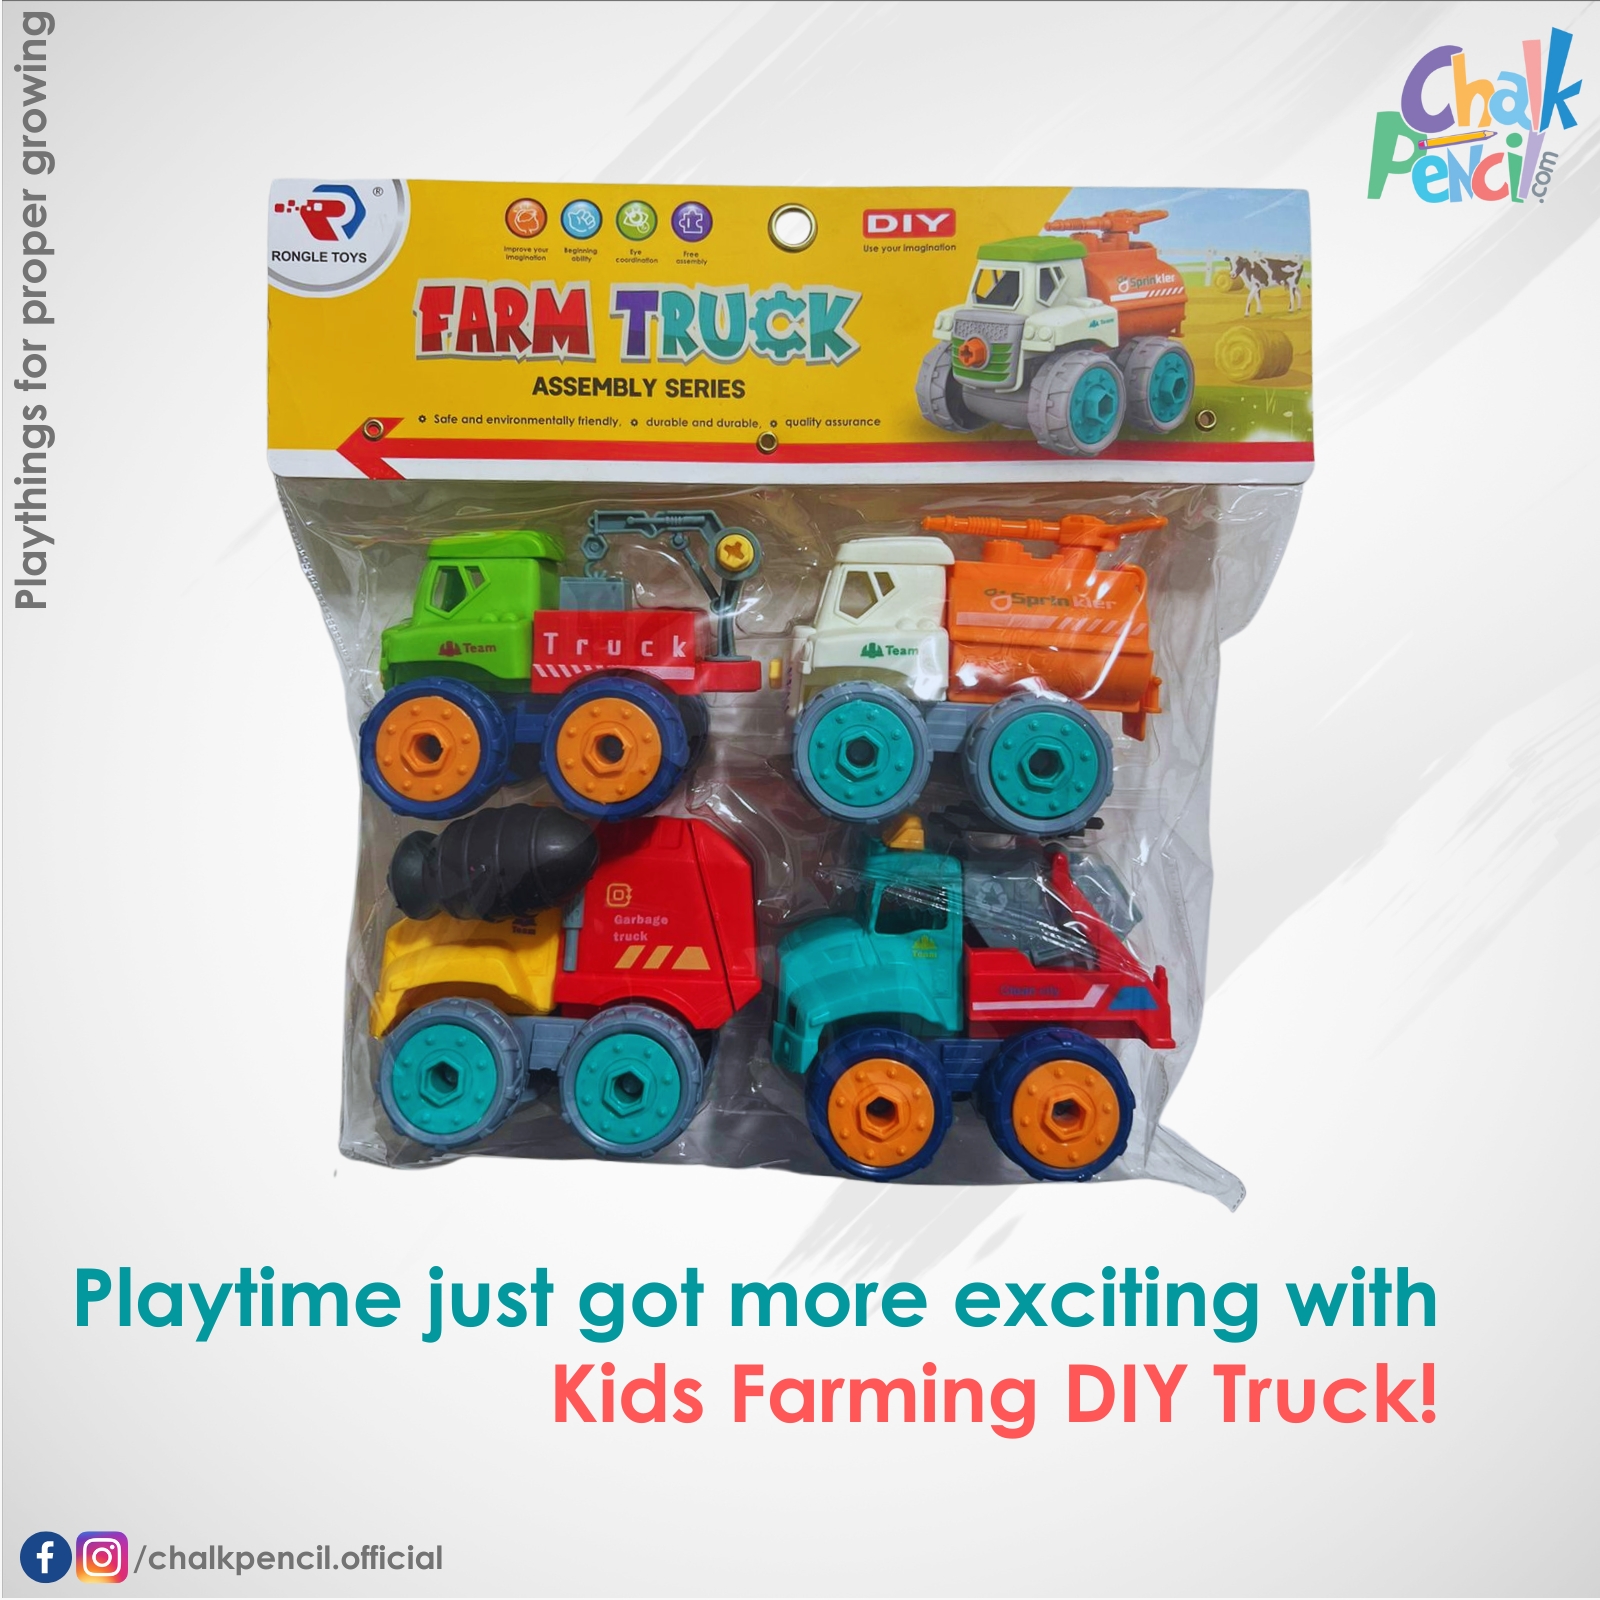 Kids Farming DIY Truck